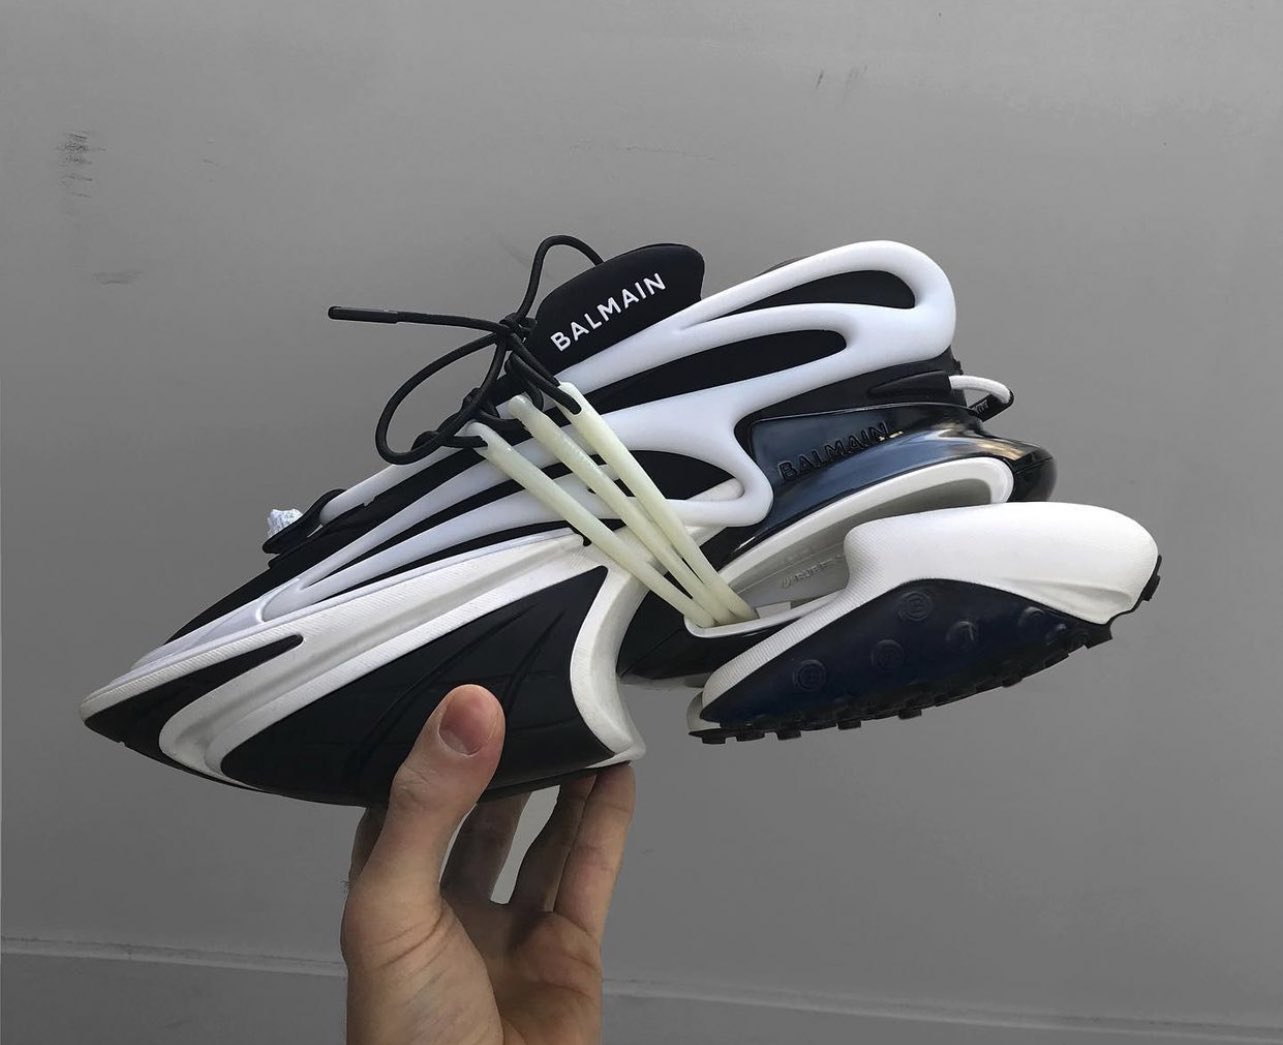 Kicks X: "Balmain Sneakers 🛥 https://t.co/dkEy5Fq798" X